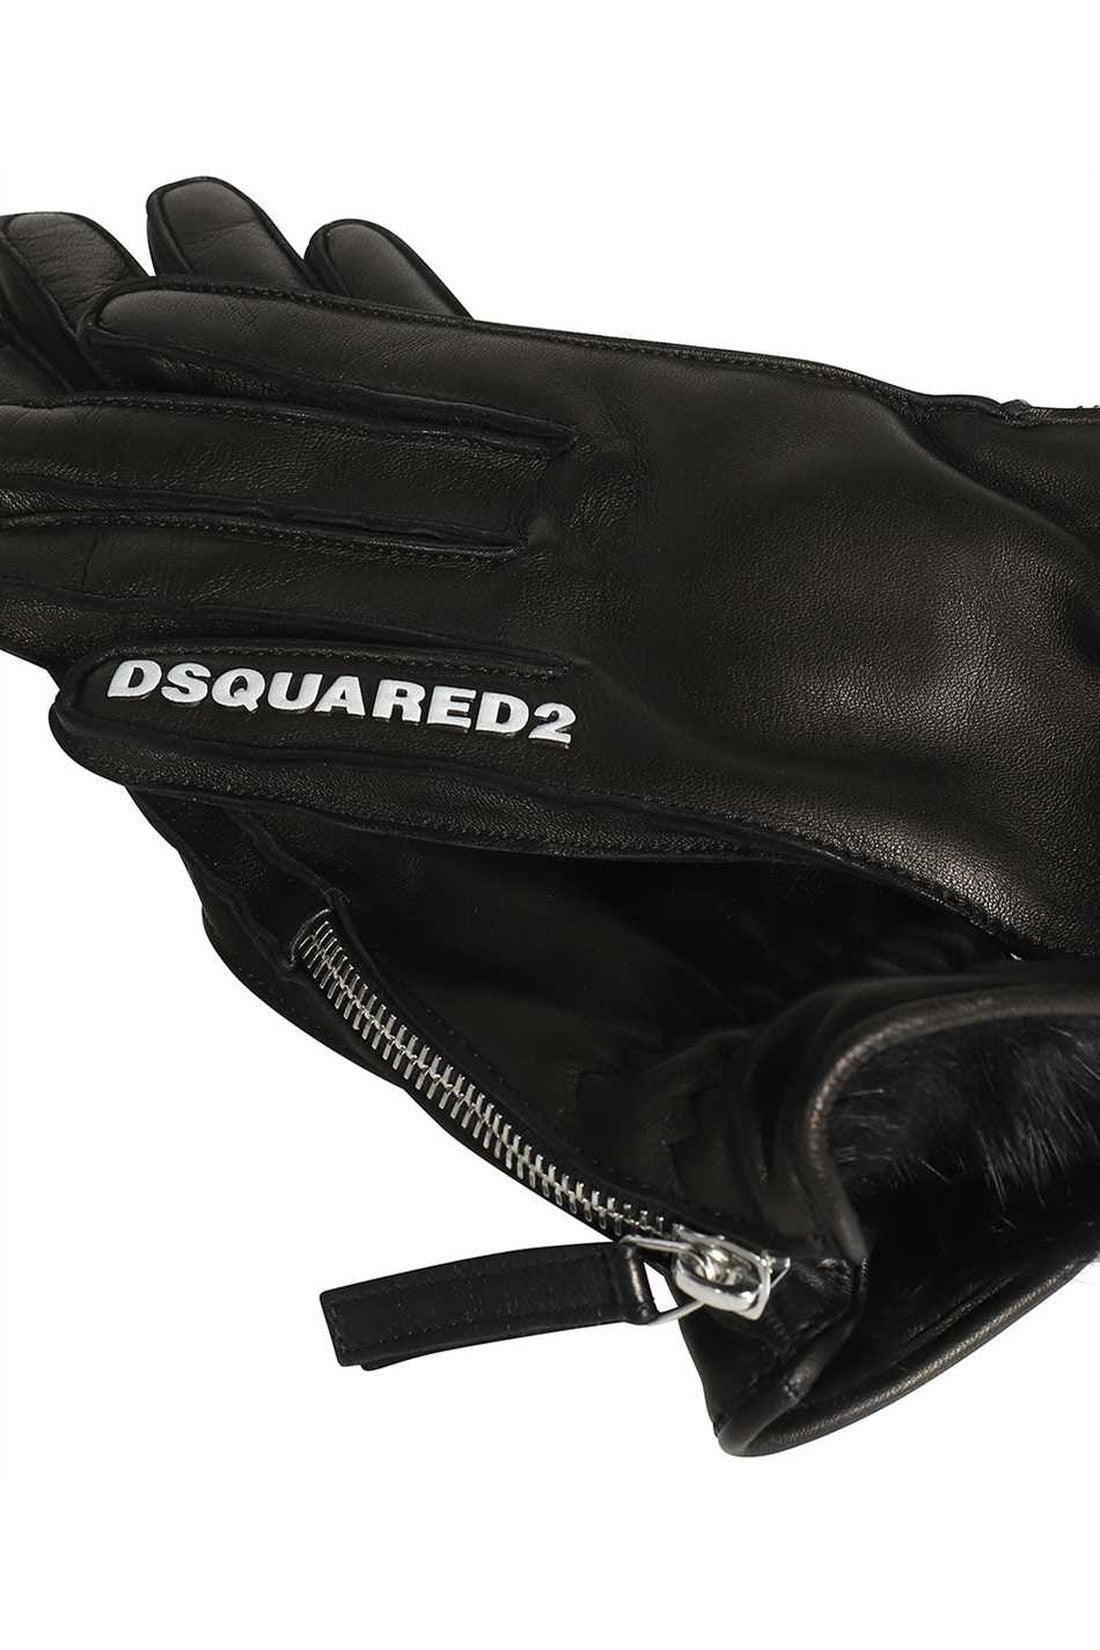 Dsquared2-OUTLET-SALE-Leather gloves-ARCHIVIST